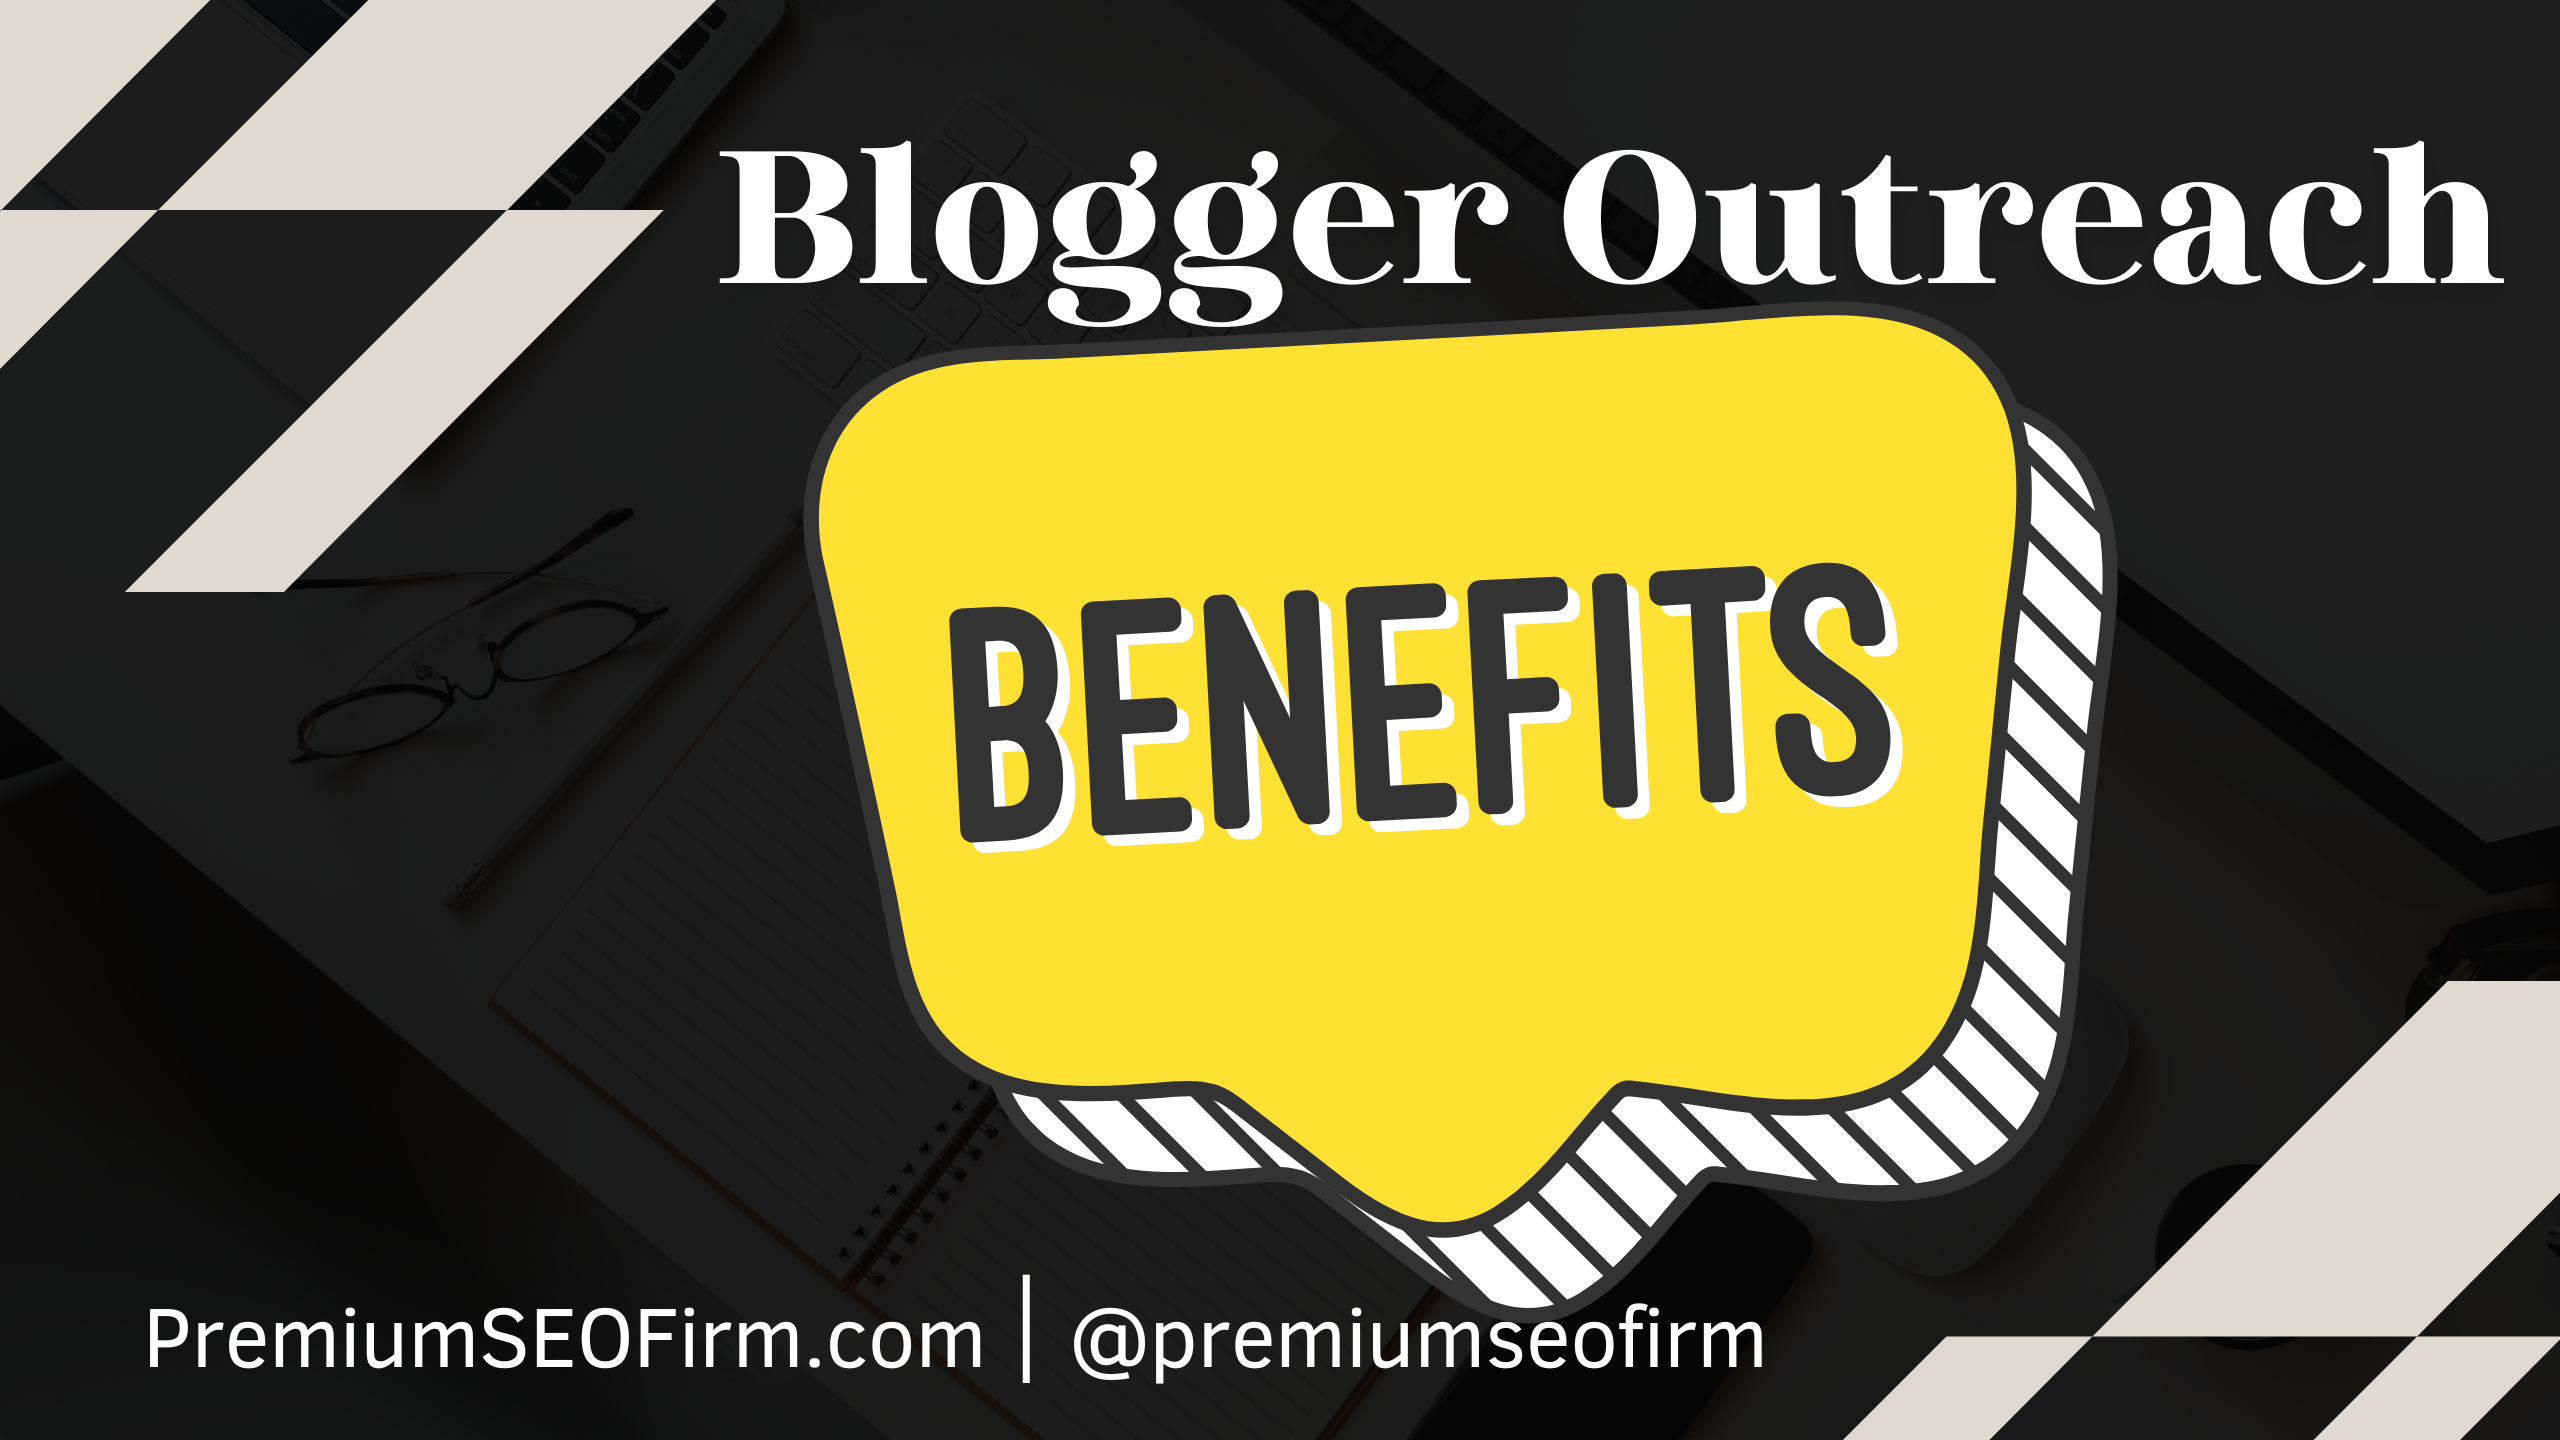 Blogger Outreach Benefits